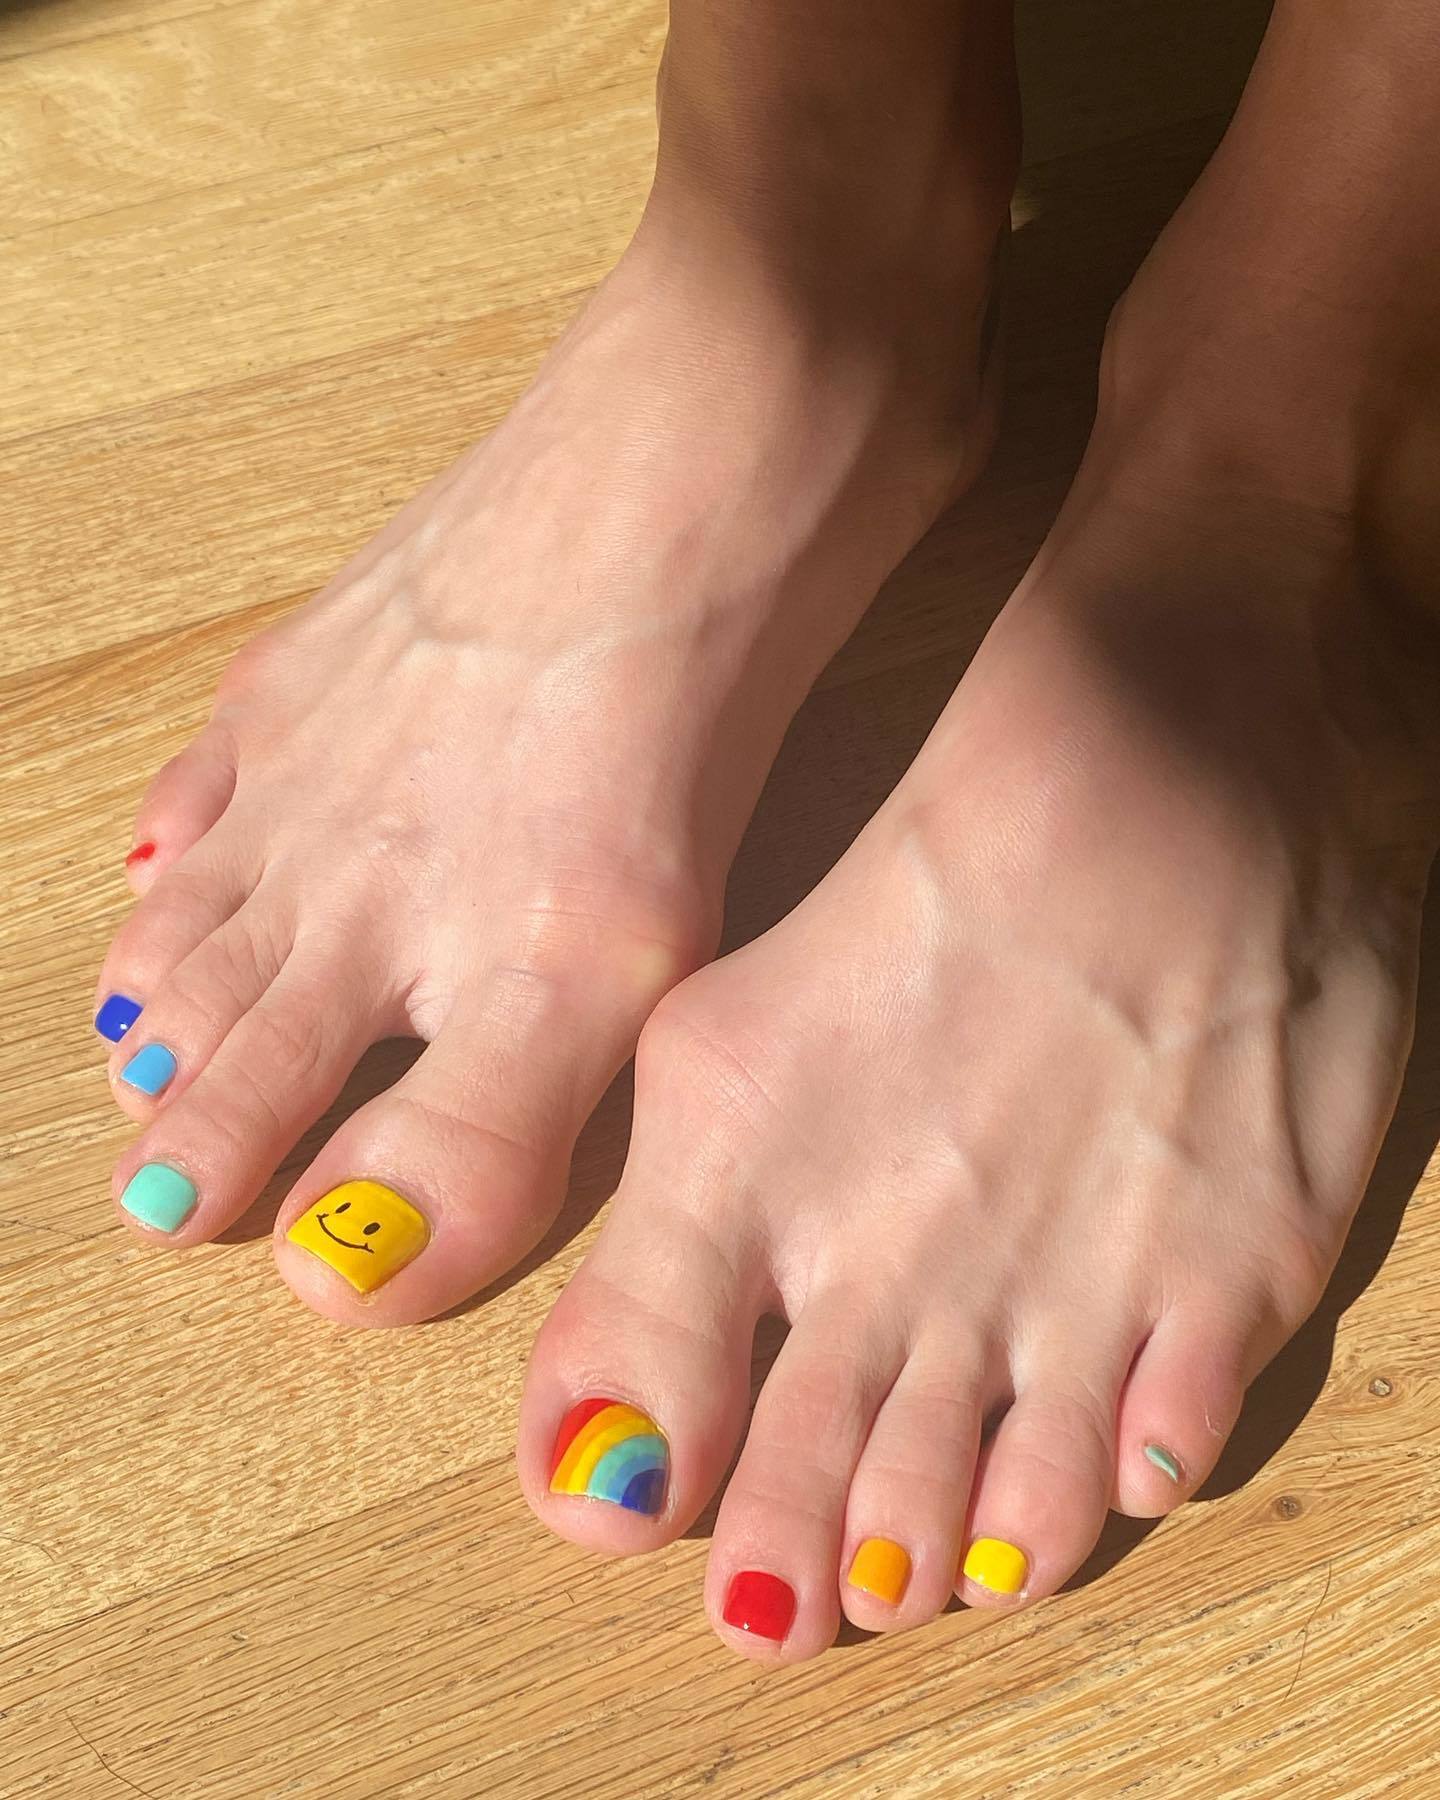 Chloë Grace Moretzs Feet 